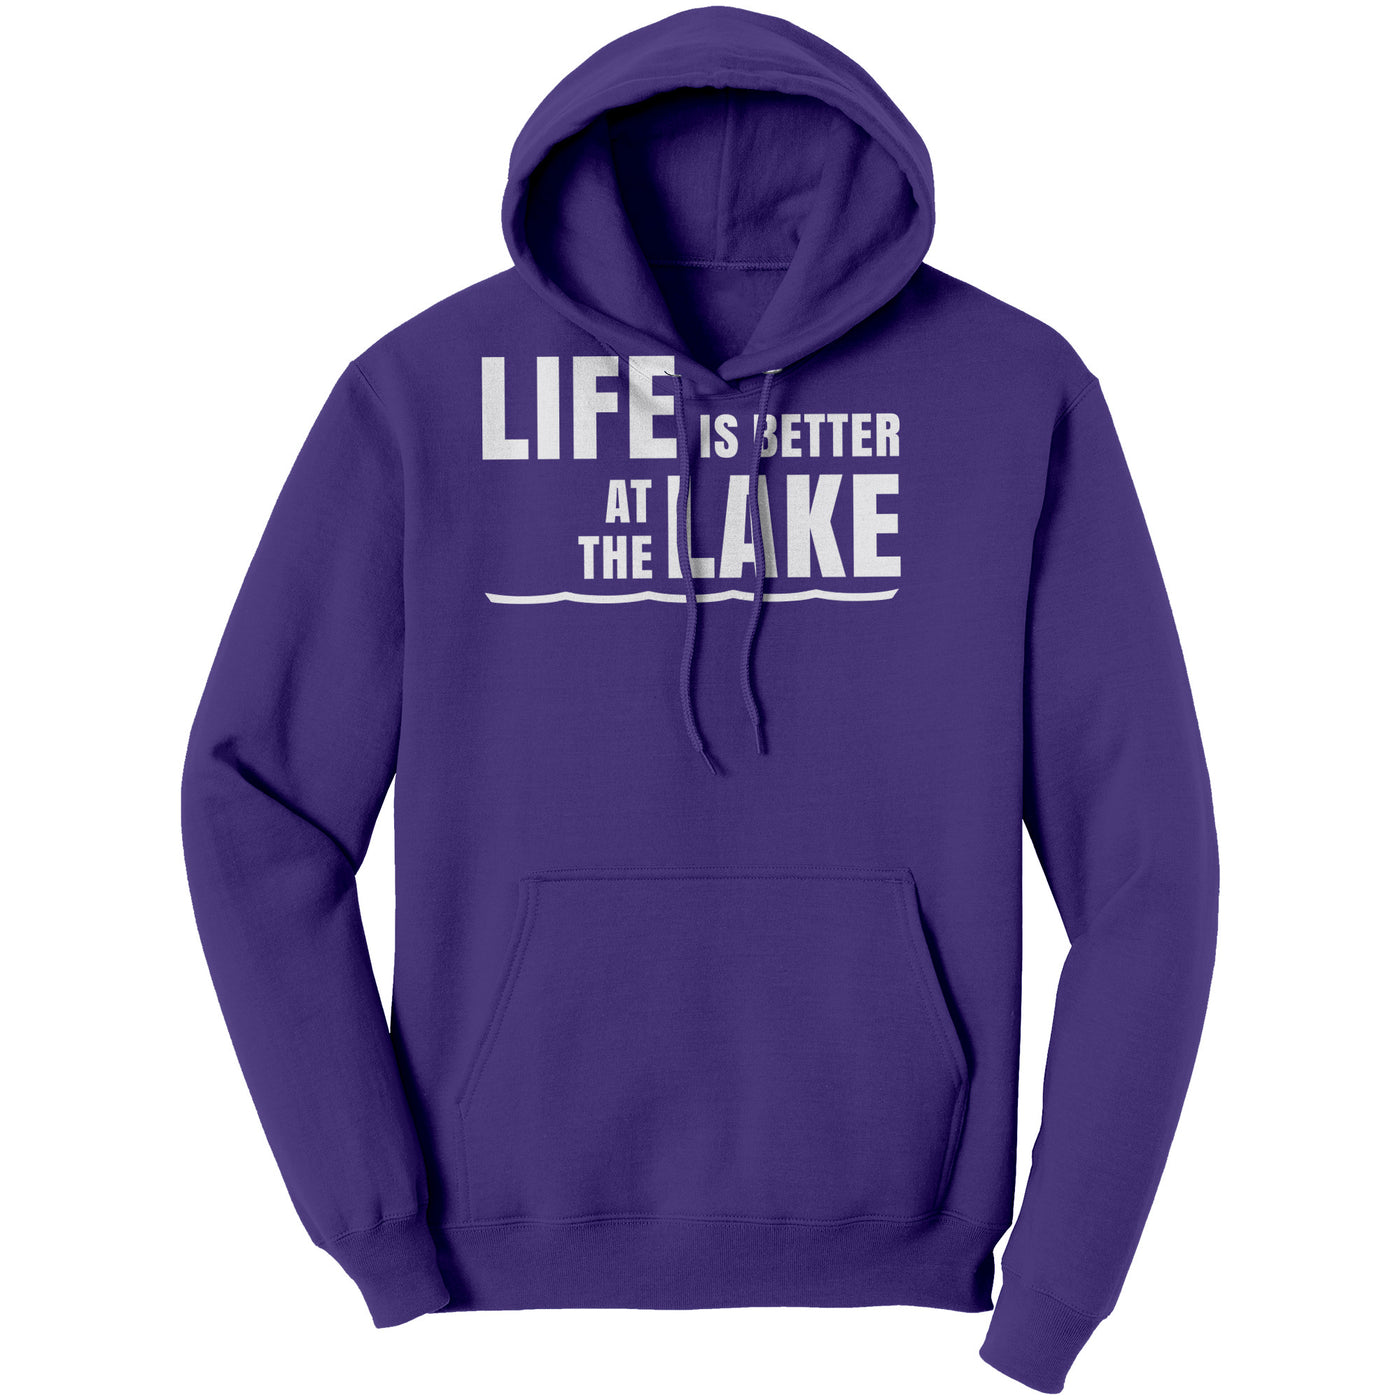 Lake Custom Hooded Sweatshirt